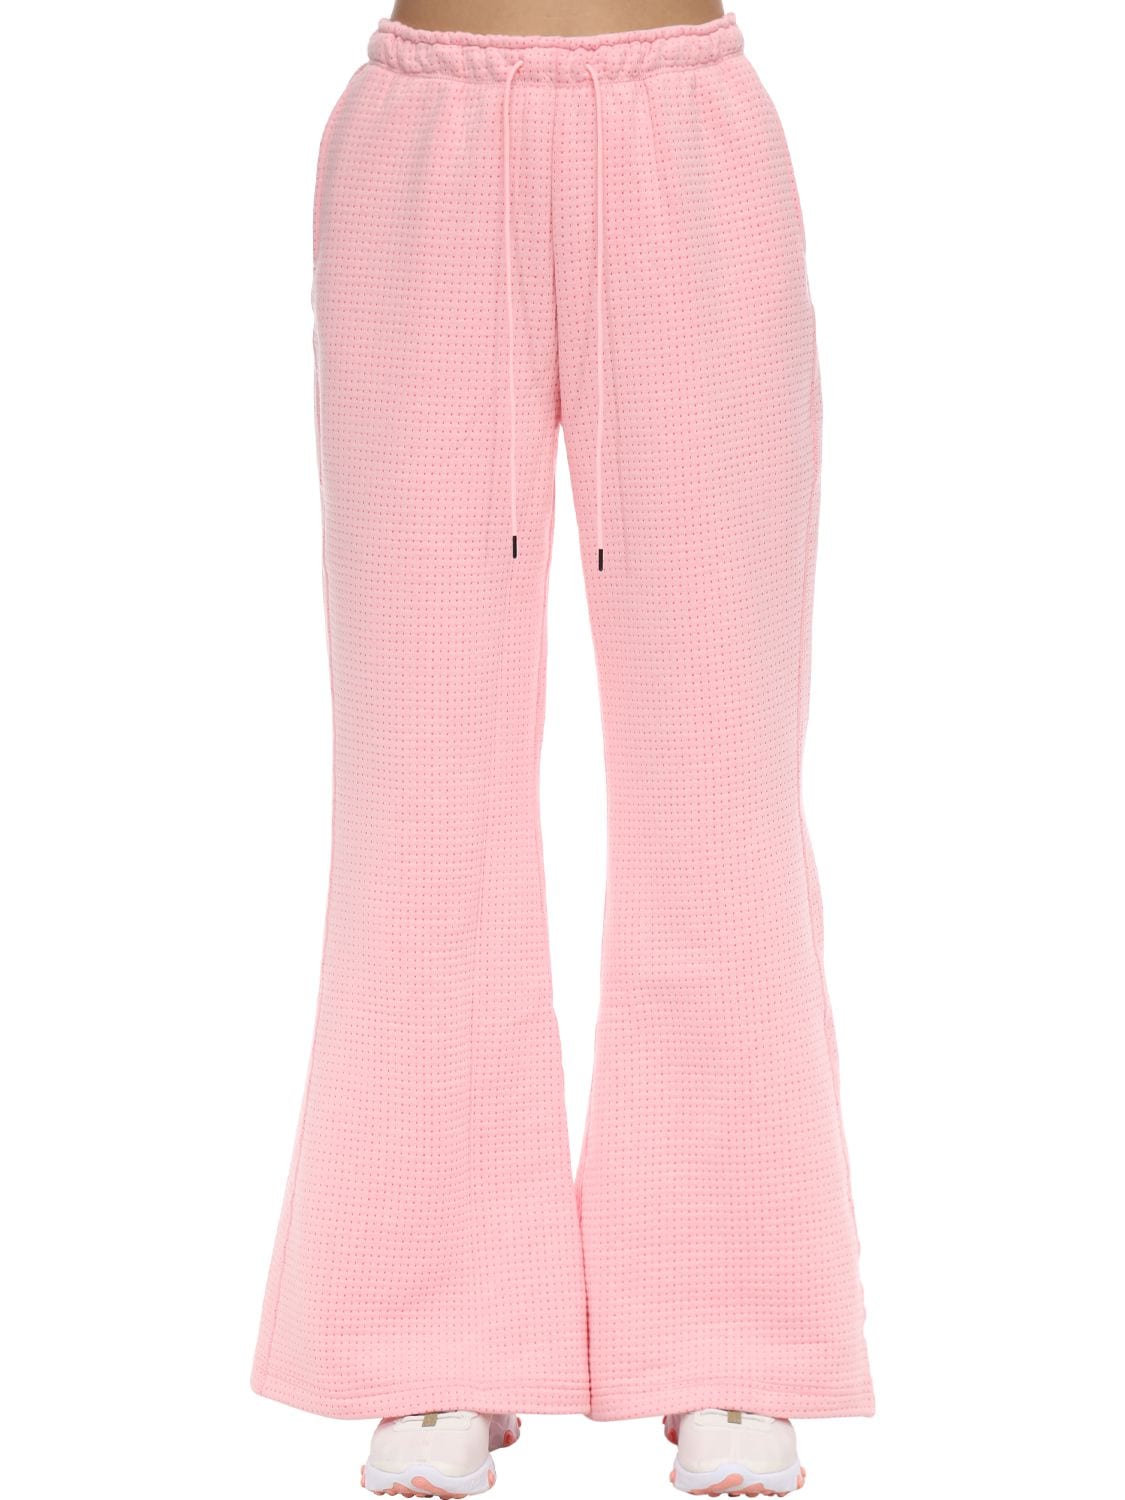 Nike Nsw Tch Flc Eng Oh Pants In Pink